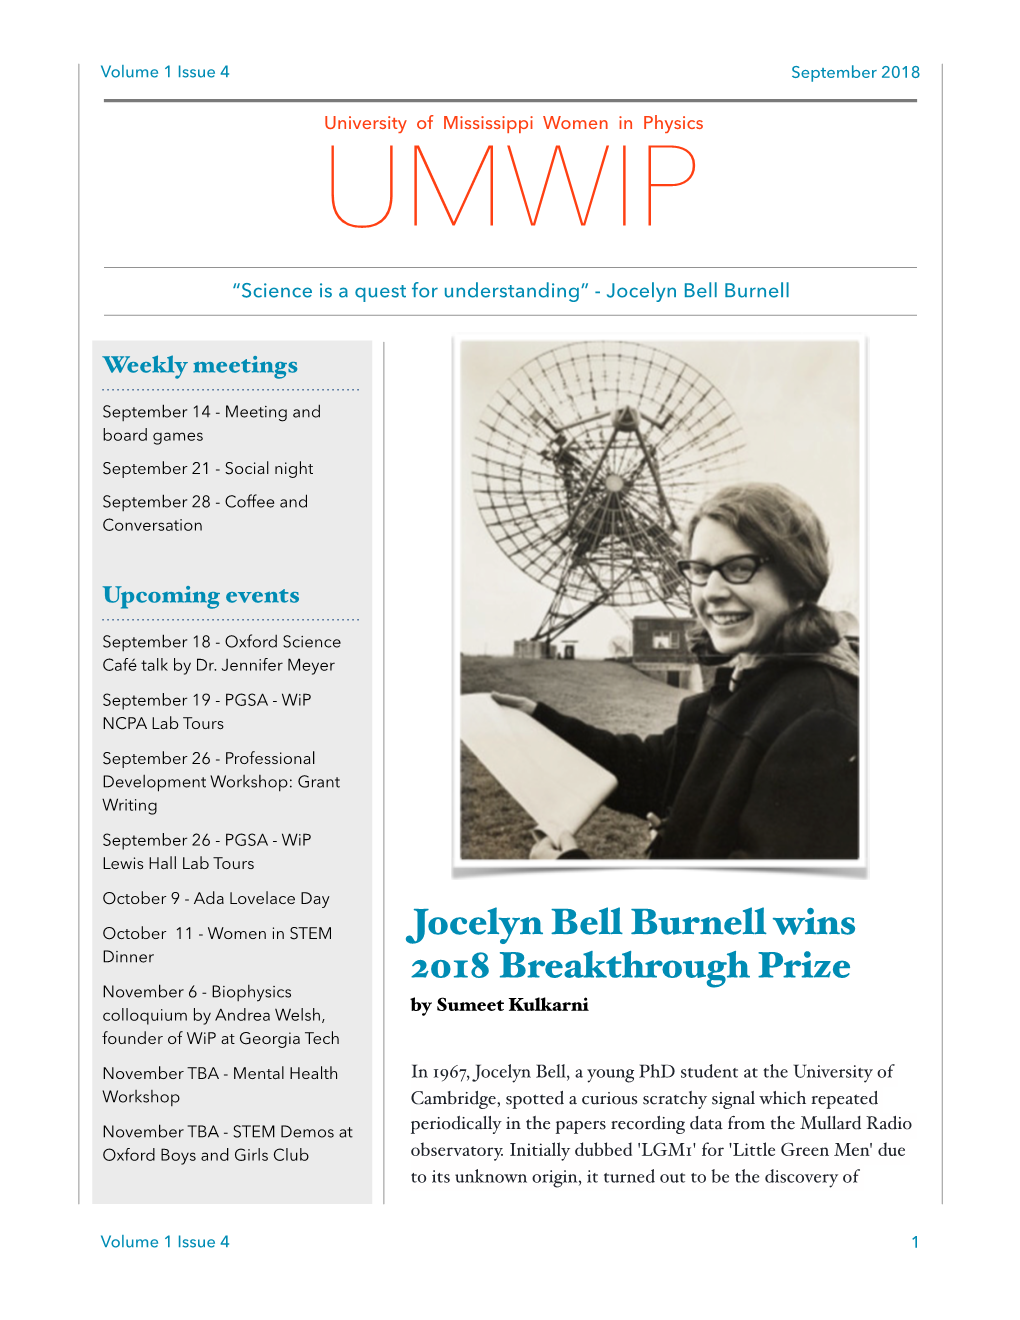 Jocelyn Bell Burnell Wins 2018 Breakthrough Prize